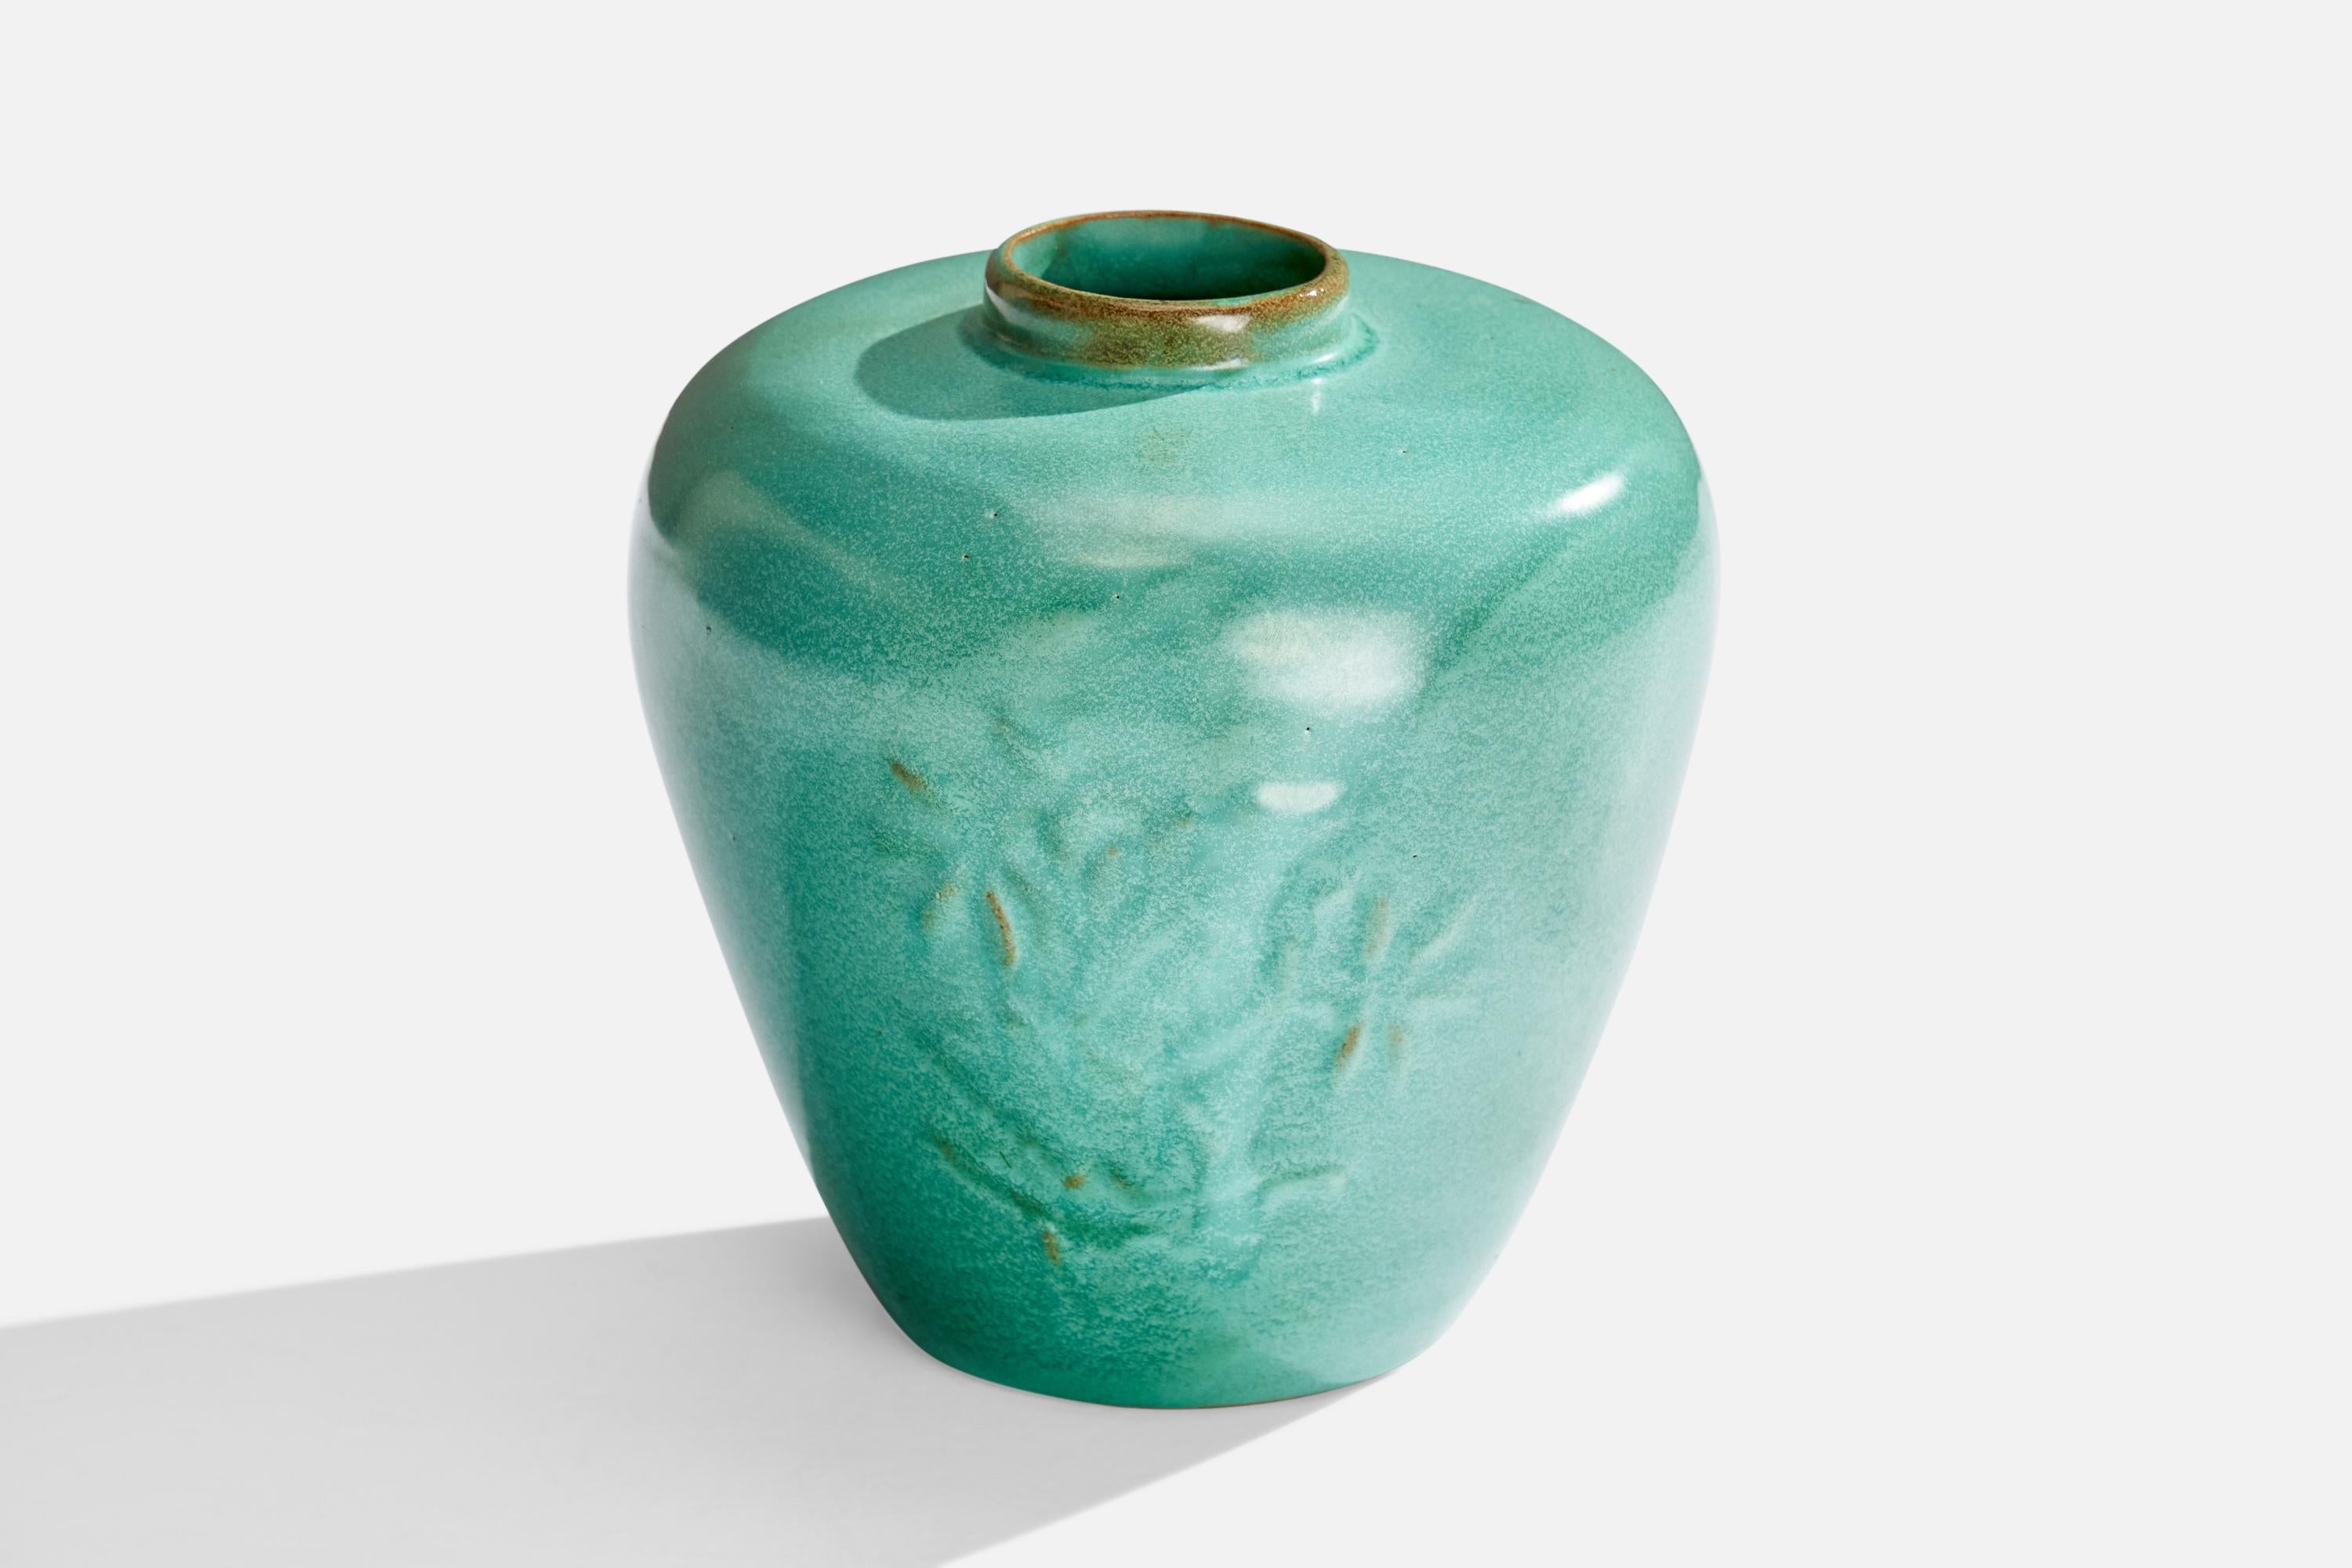 A green-glazed ceramic vase designed and produced in Sweden, 1930s.